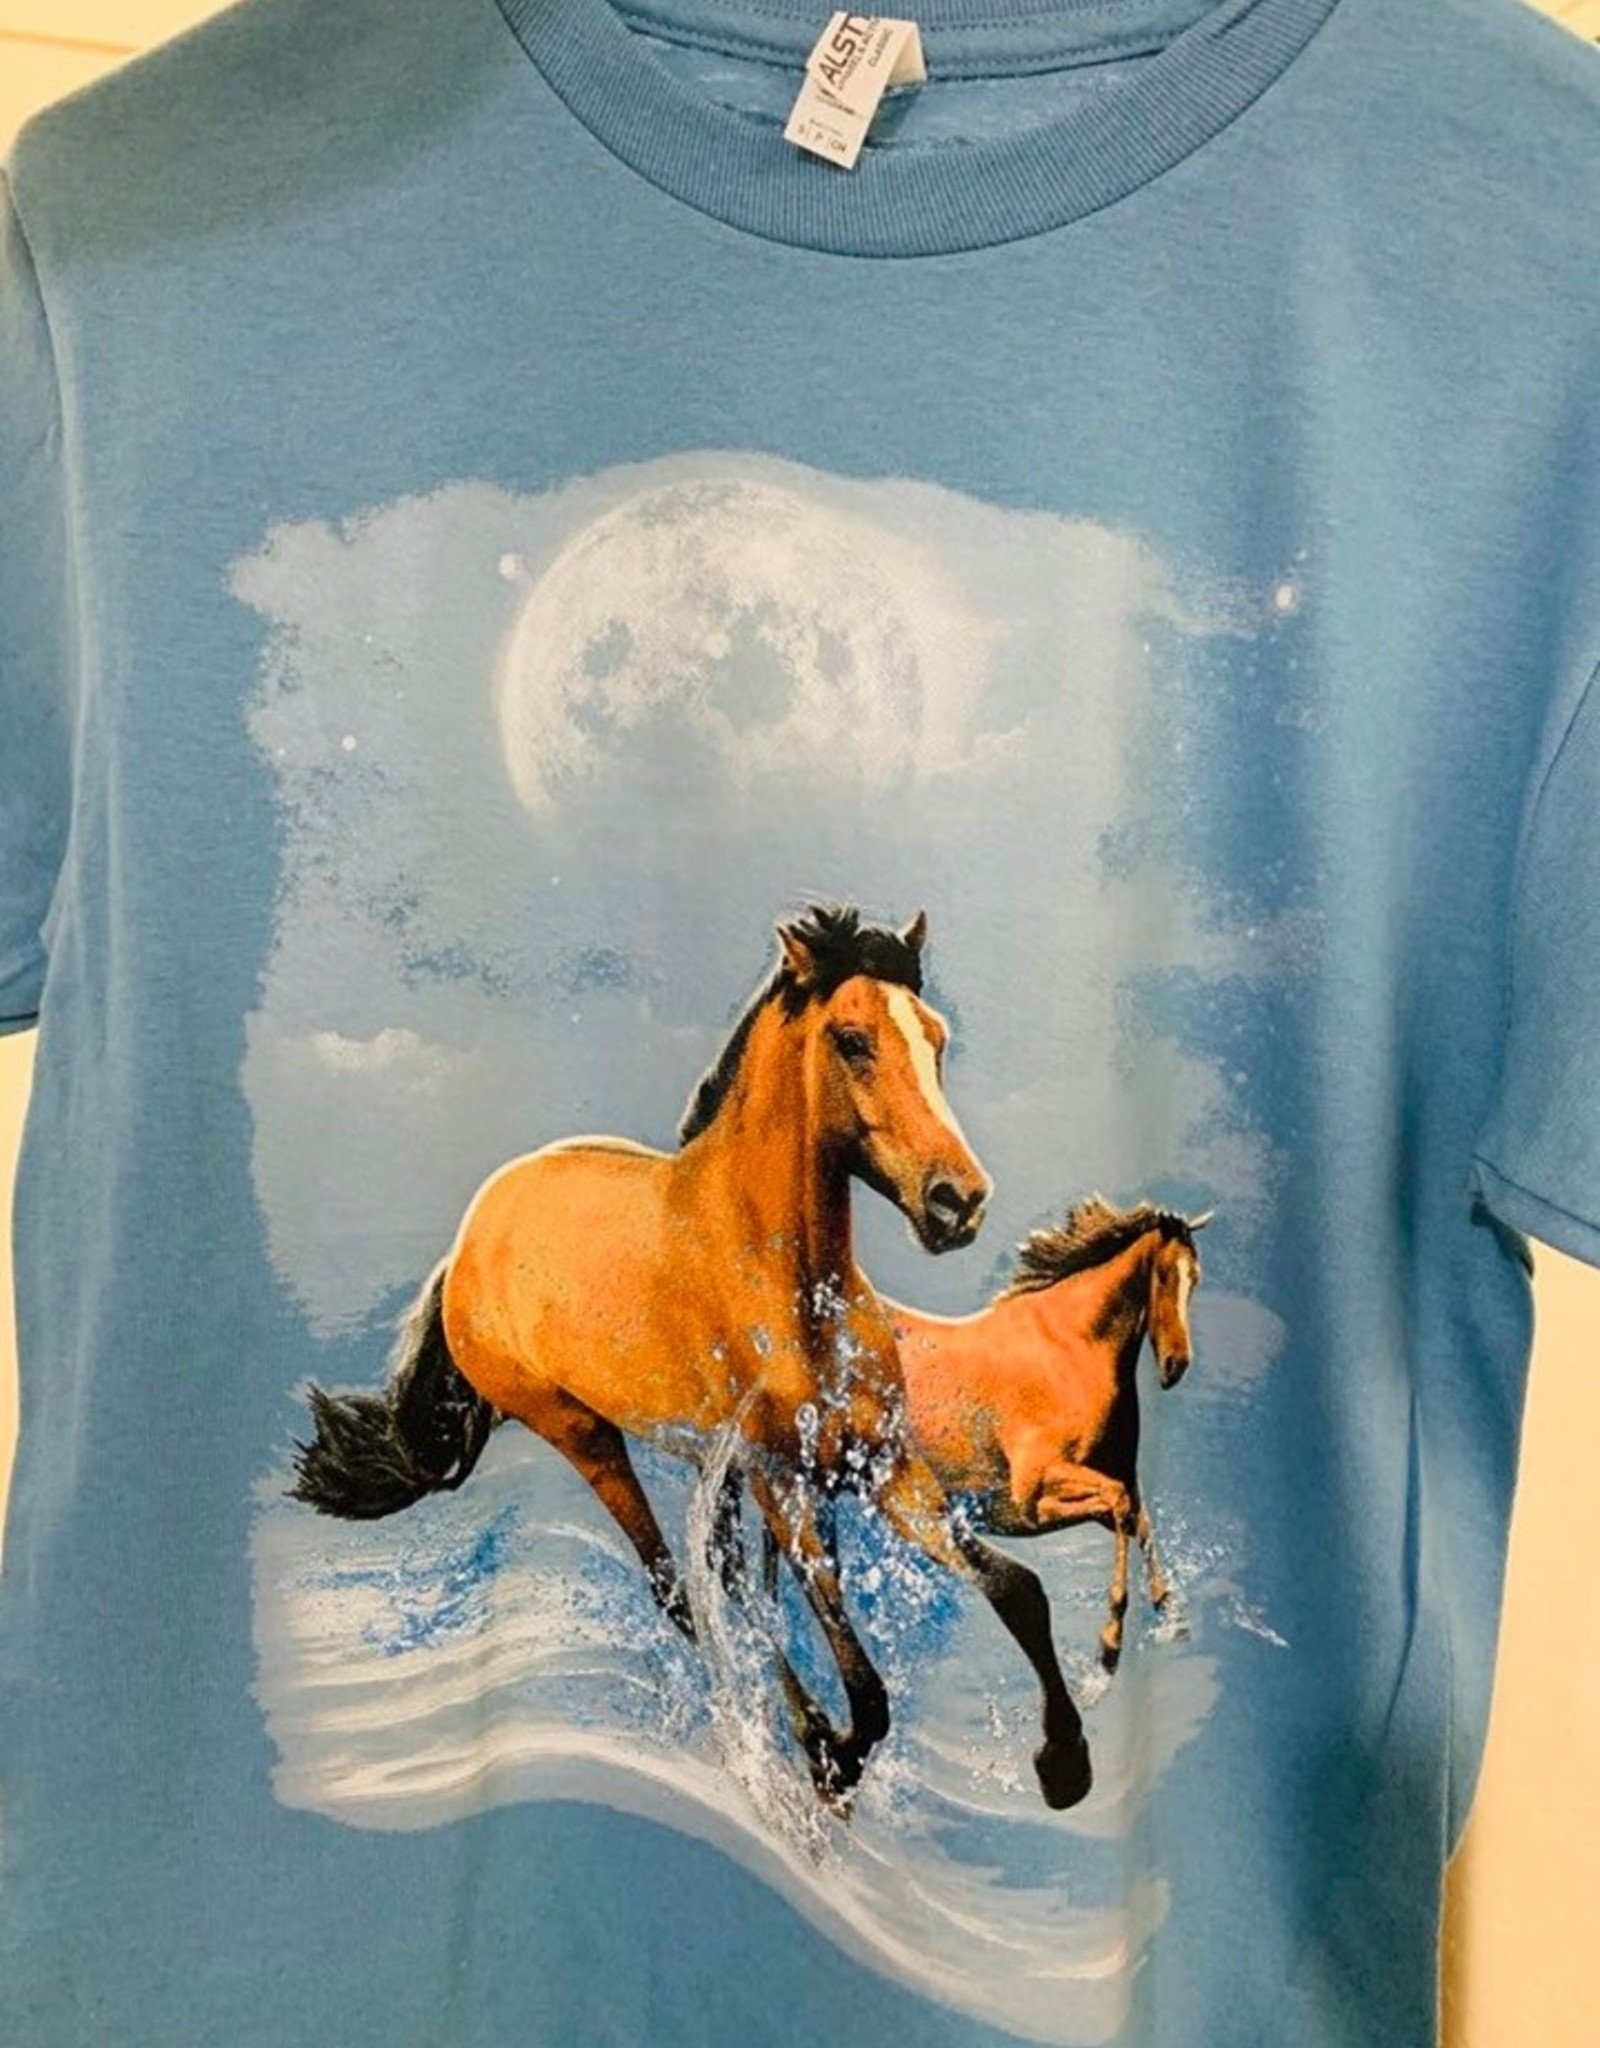 T shirt - Horses running in water